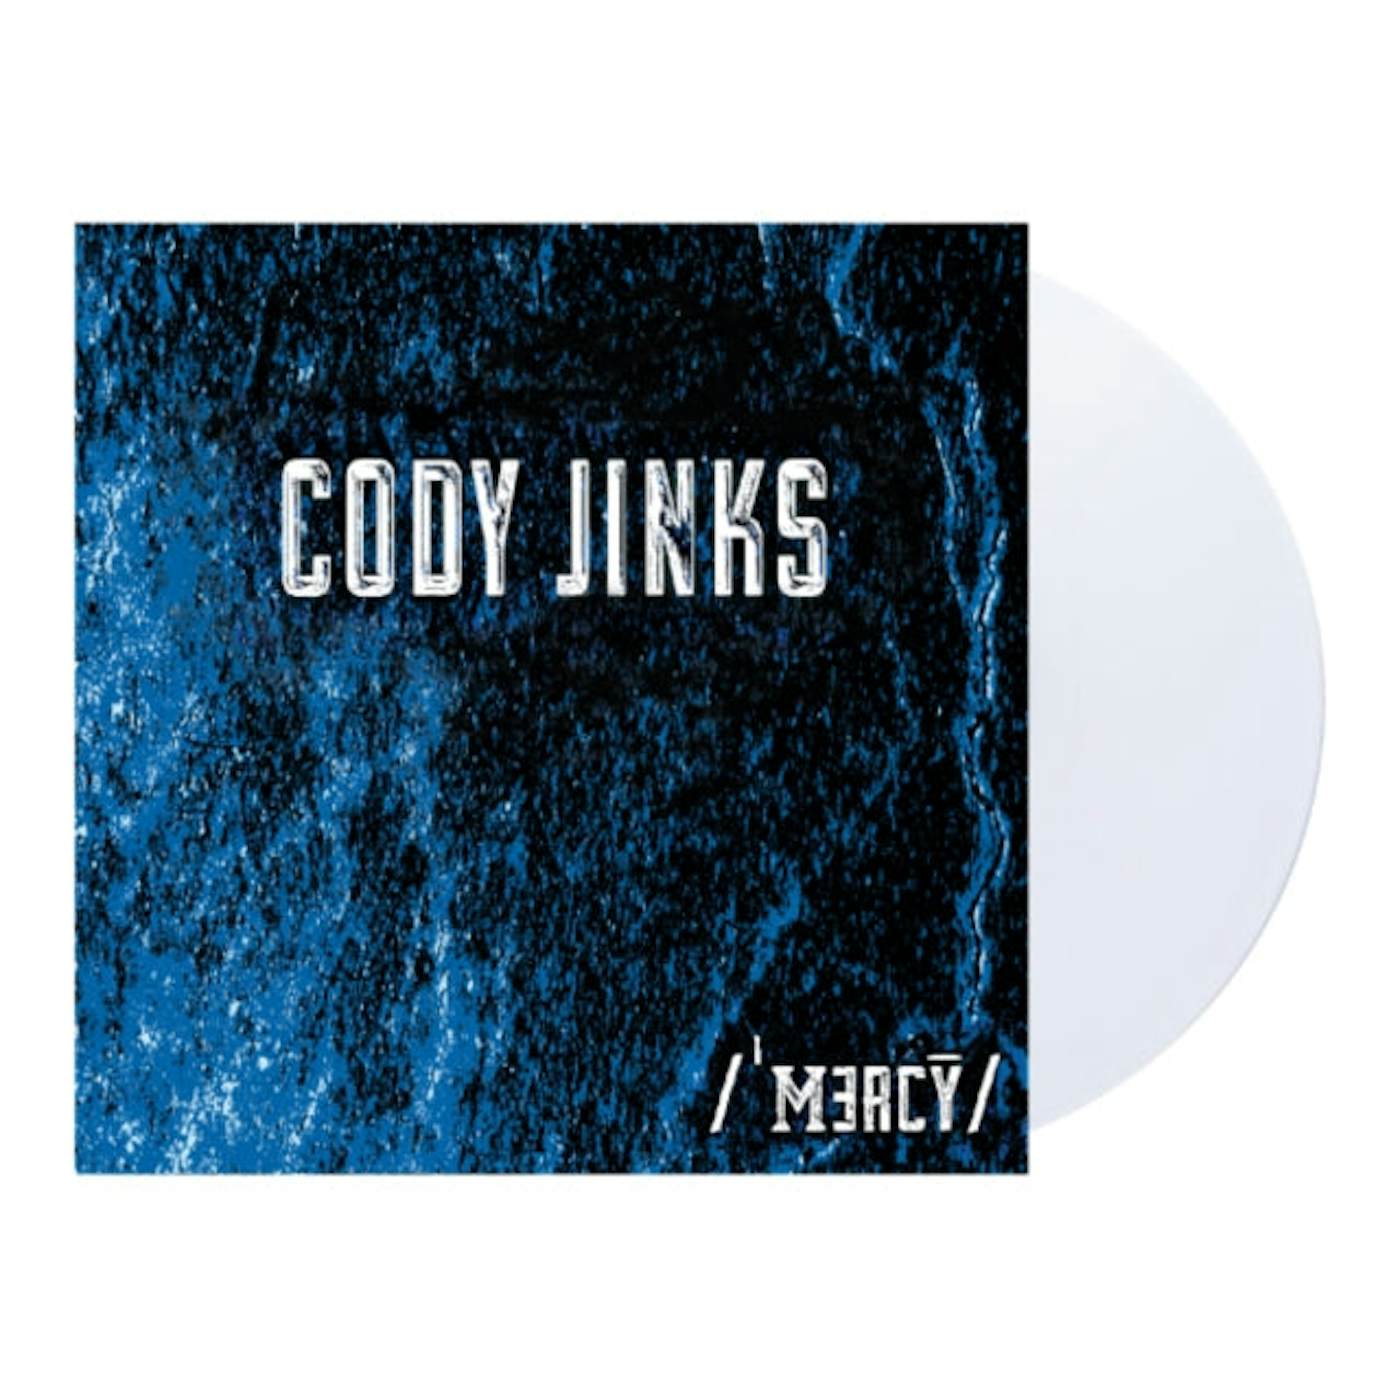 Cody Jinks LP - Mercy (White Vinyl)